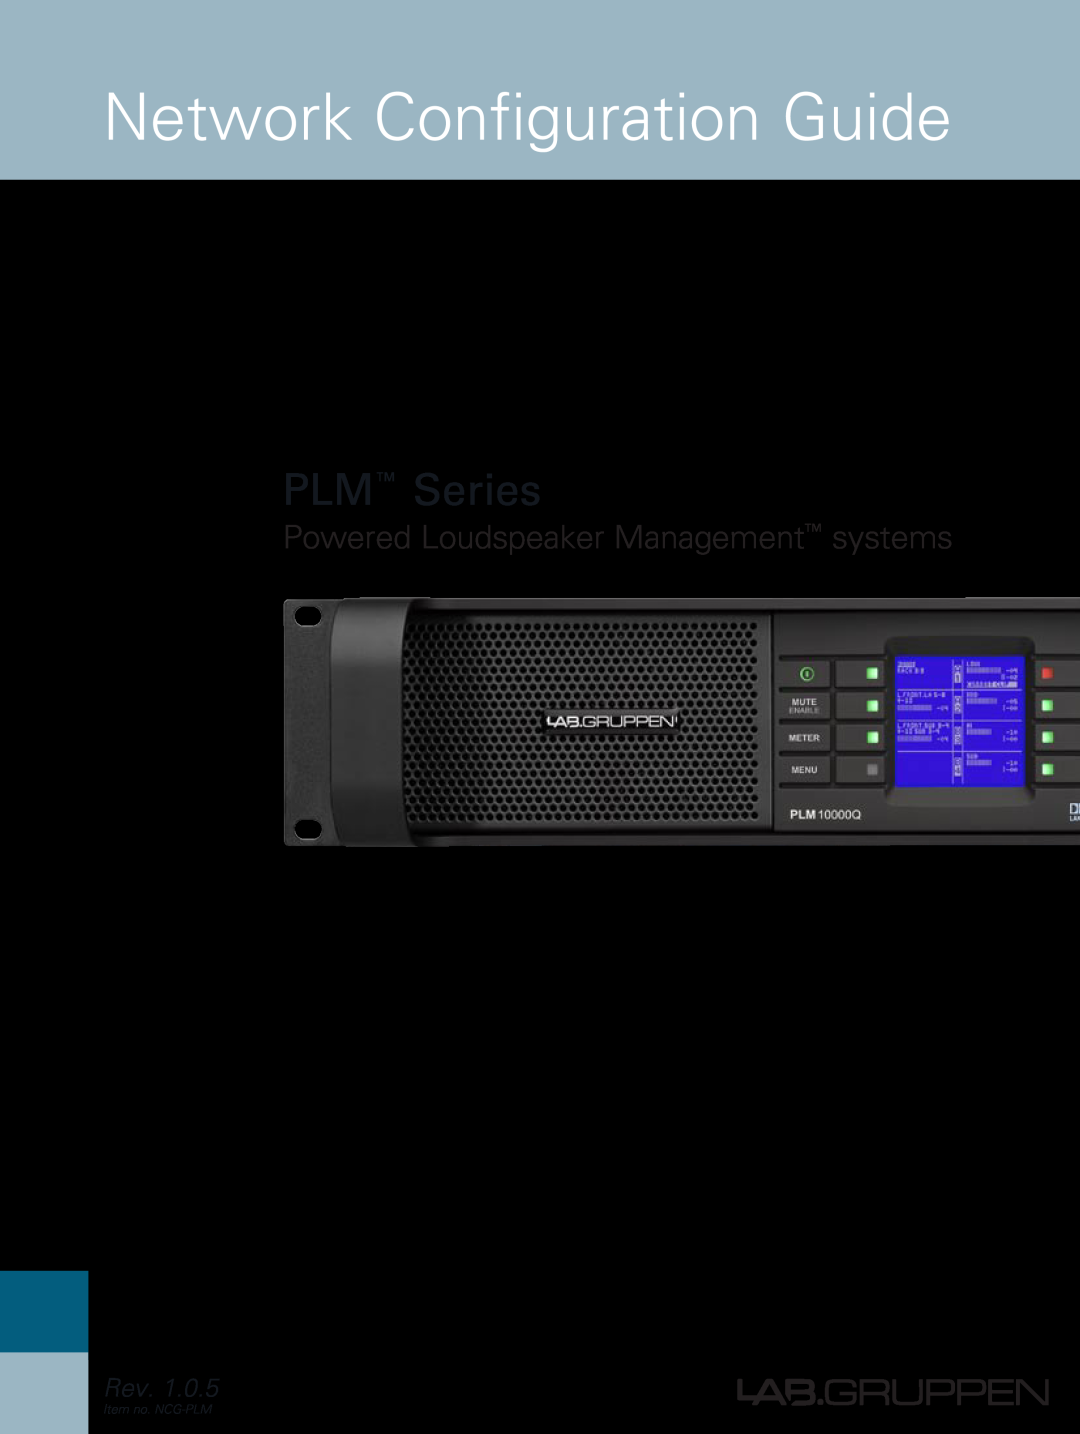 3Com manual Network Configuration Guide, PLM Series, Powered Loudspeaker Management systems, Rev, Item no. NCG-PLM 